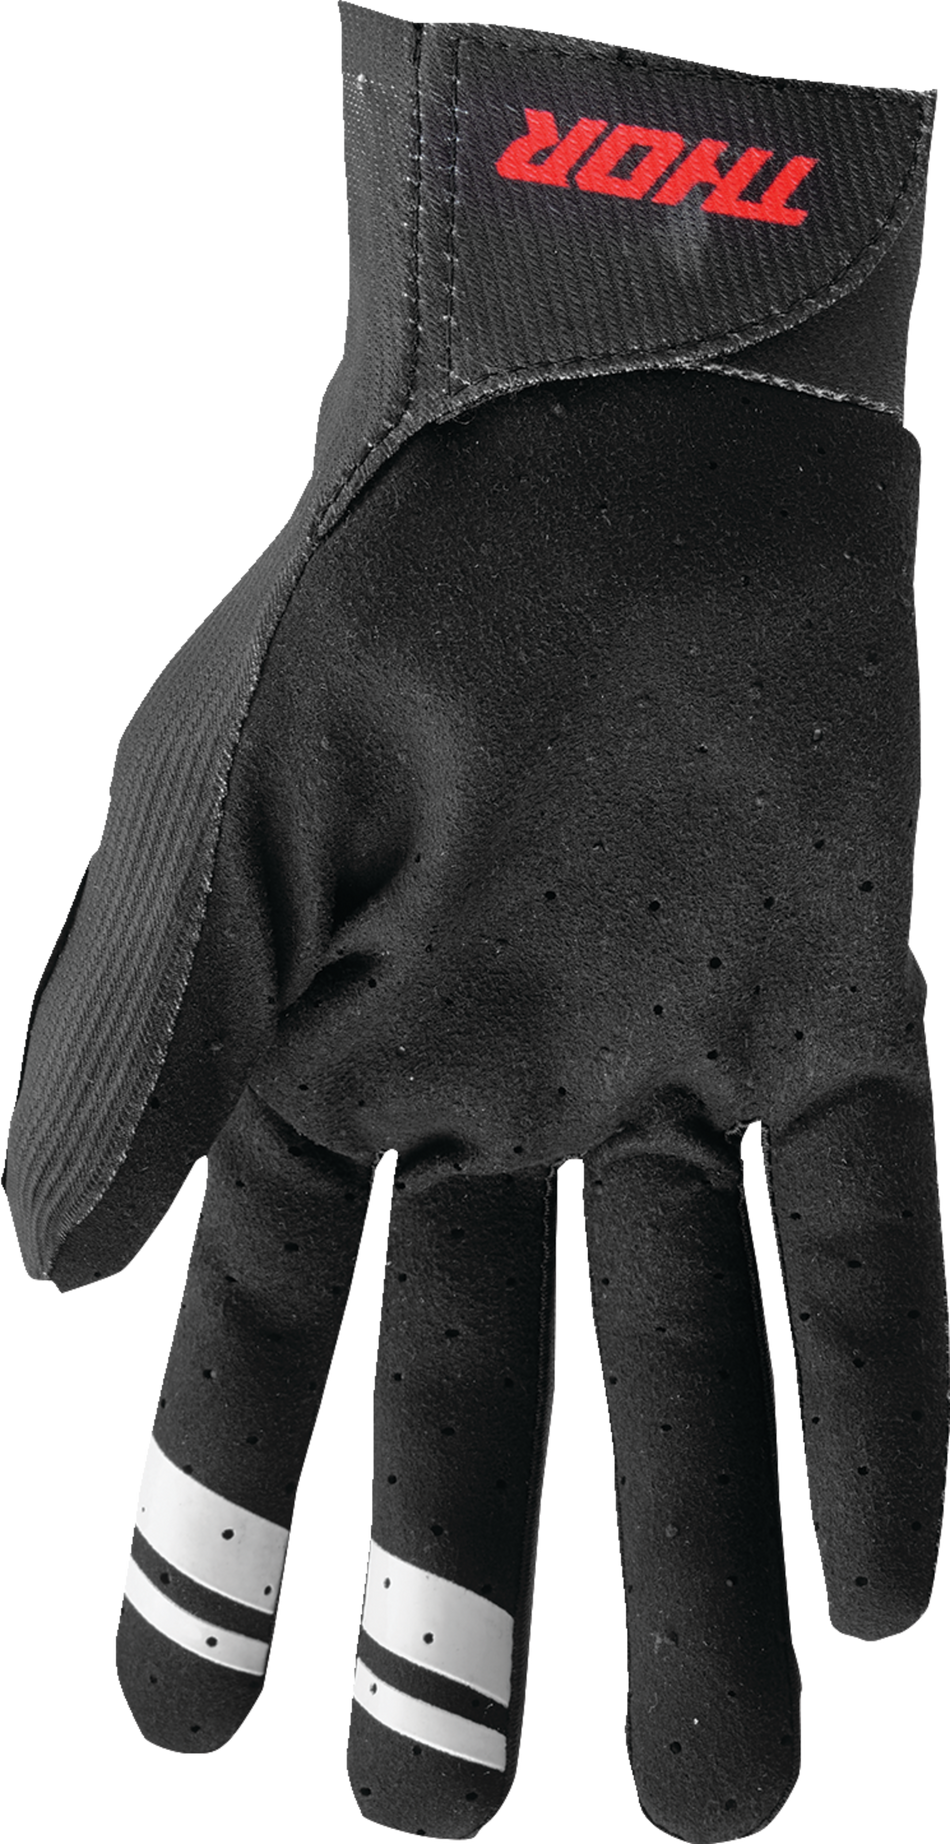 THOR Intense Assist Decoy Gloves - Black/Camo - Large 3360-0220